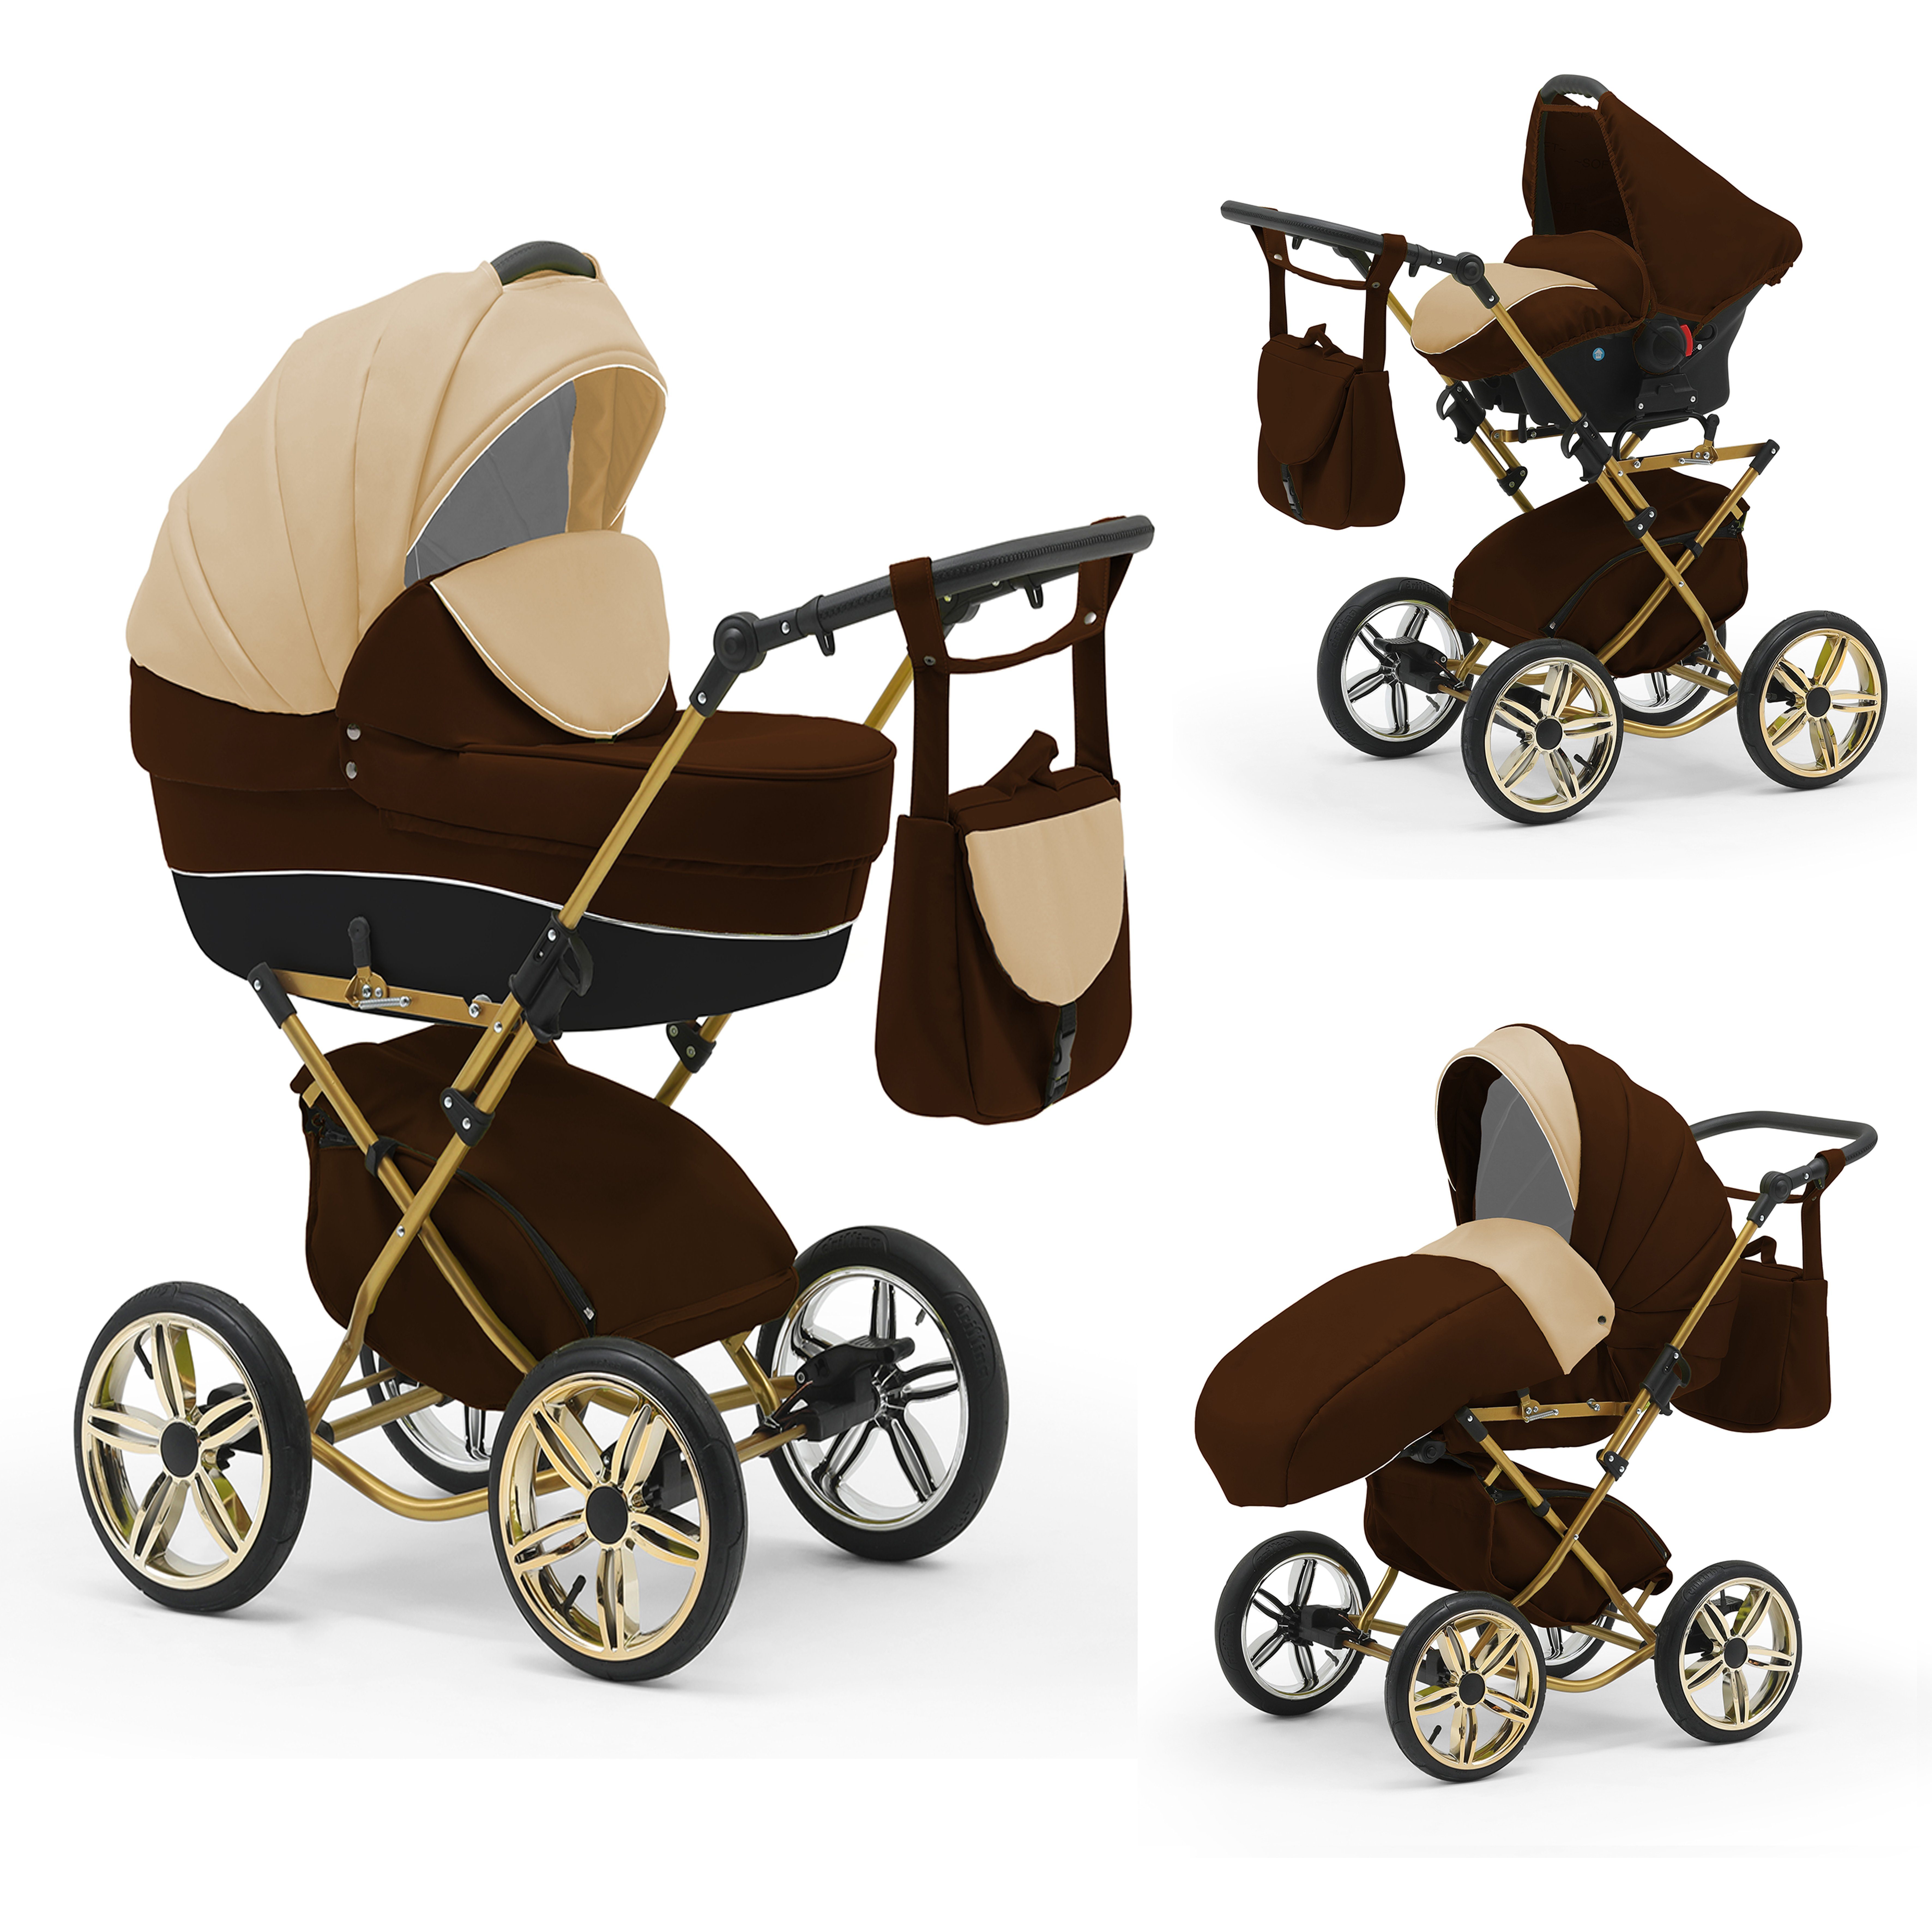 babies-on-wheels Kombi-Kinderwagen Sorento 3 in 1 inkl. Autositz - 13 Teile - in 10 Designs Beige-Braun